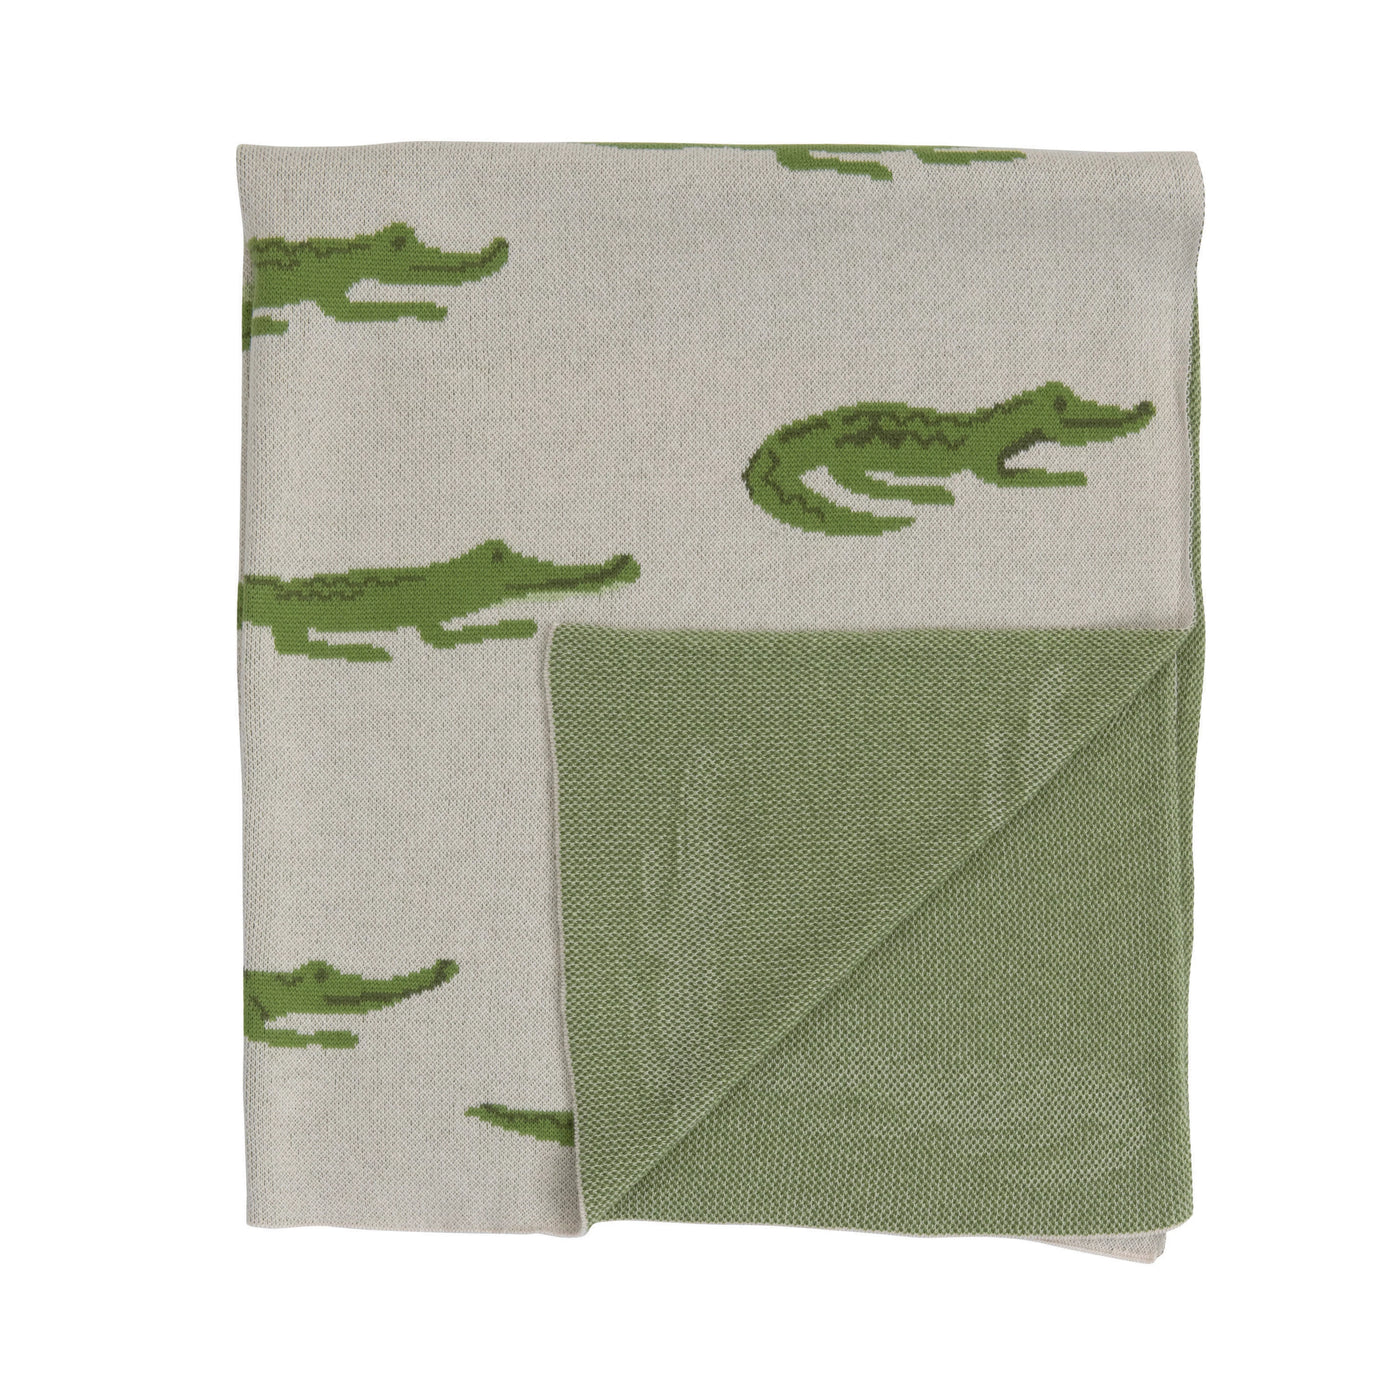 Alligator Blanket